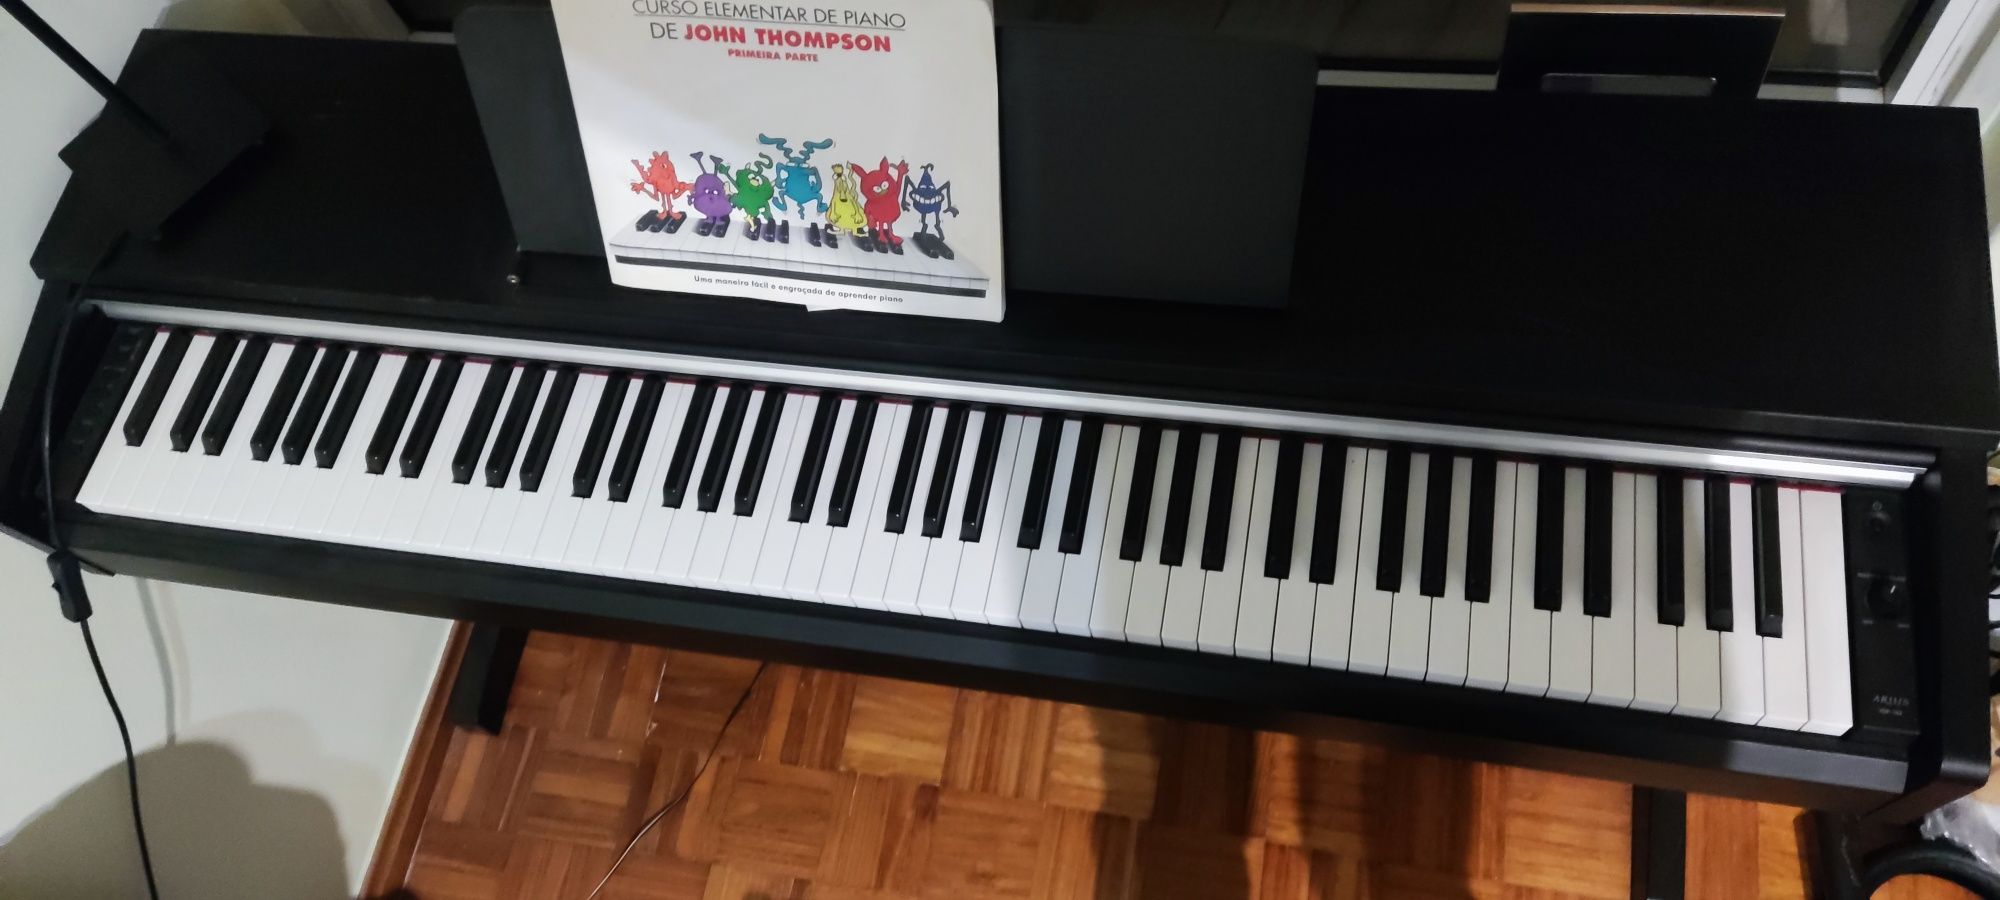 Piano digital Yamaha